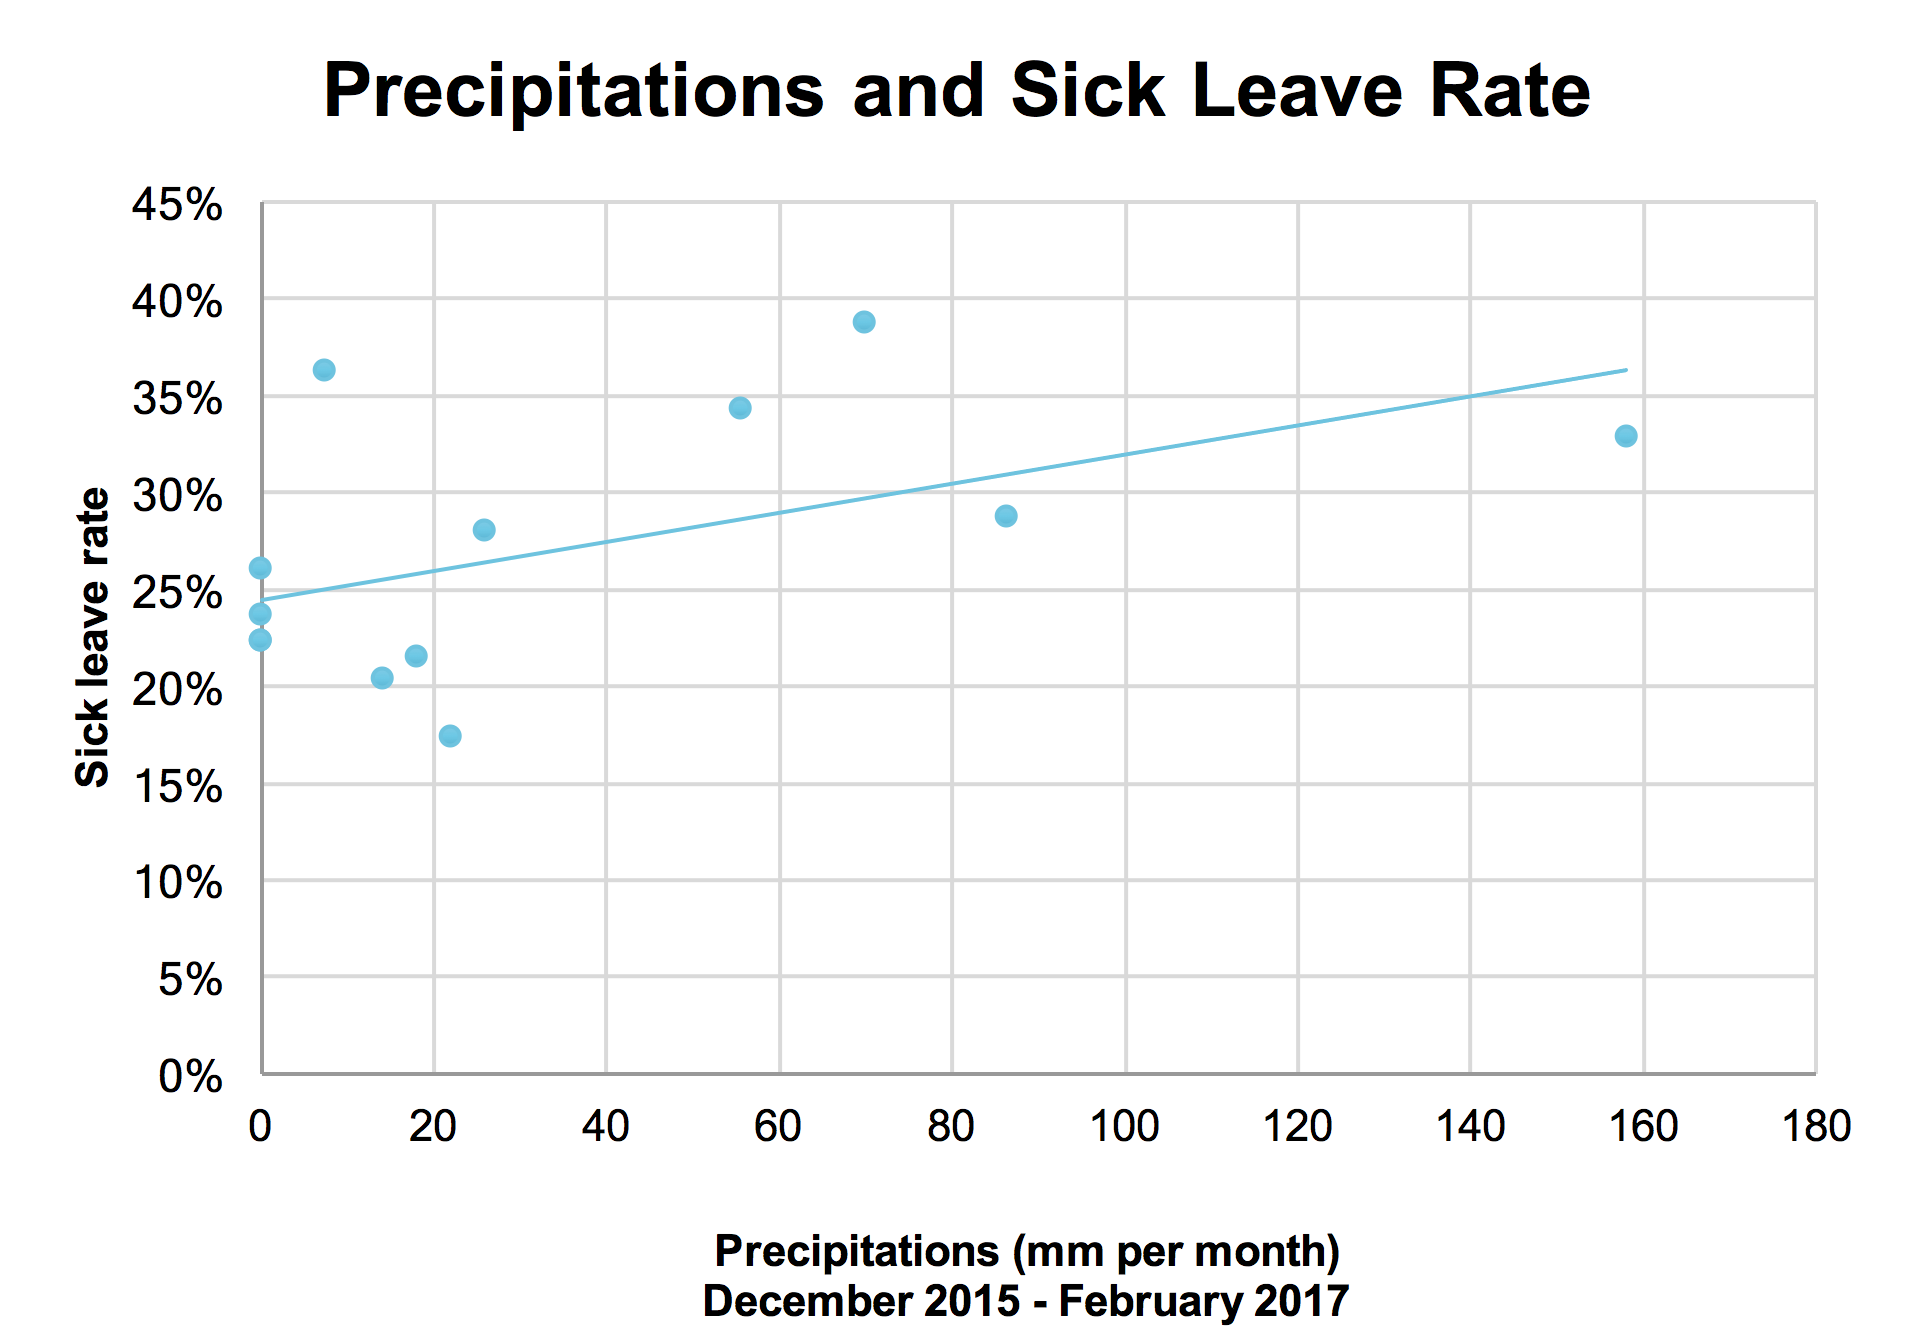 Figure 2: Precipitations and Sick Leave